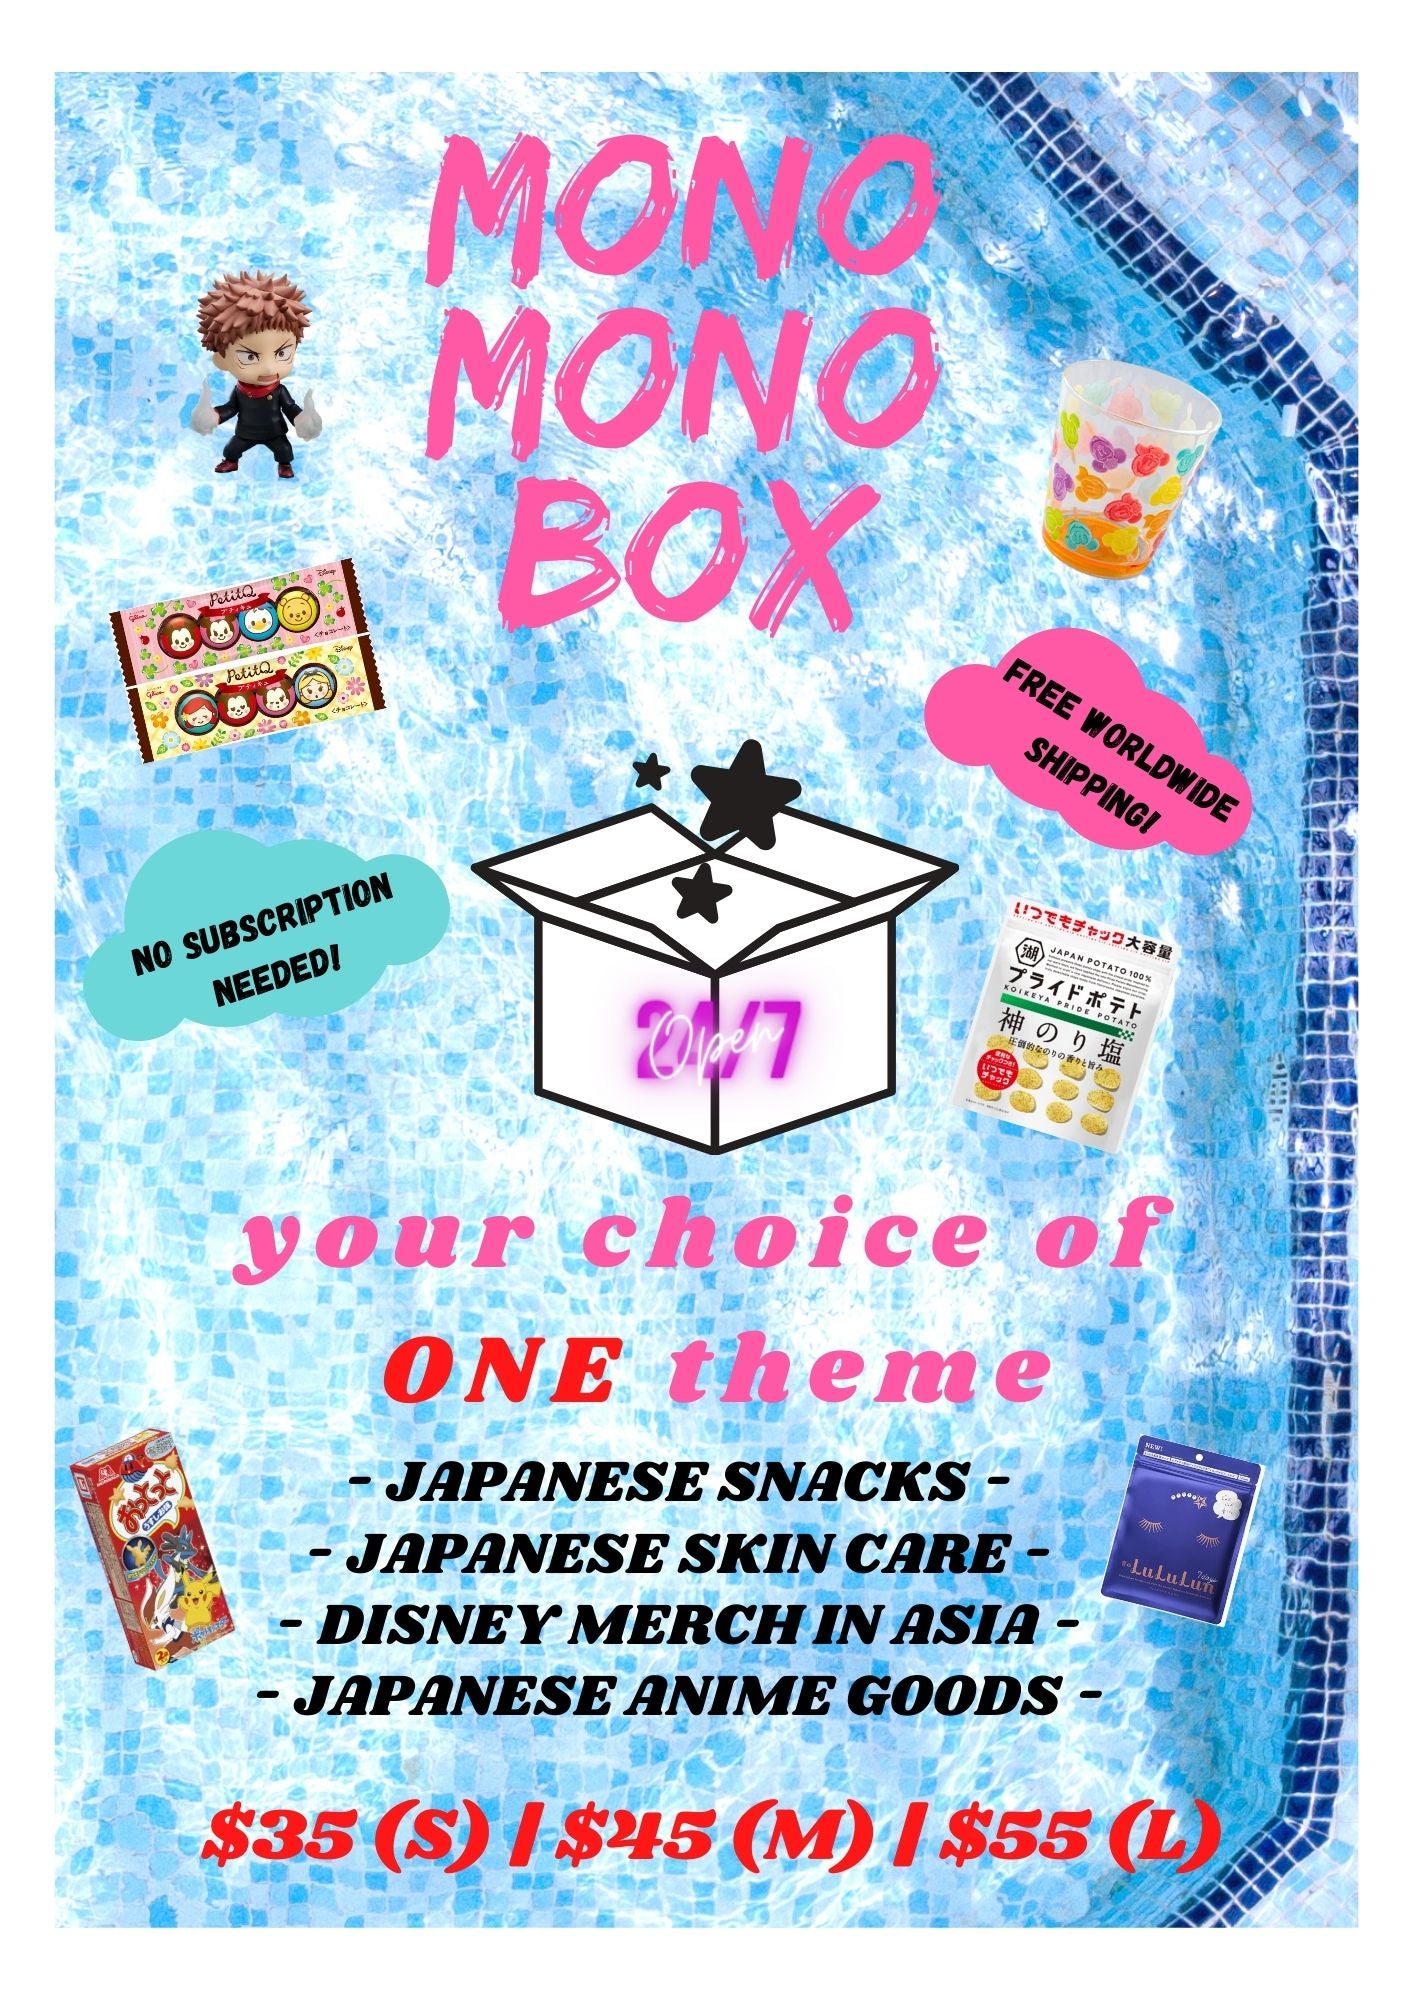 MONO MONO BOX - Japanese Anime merch